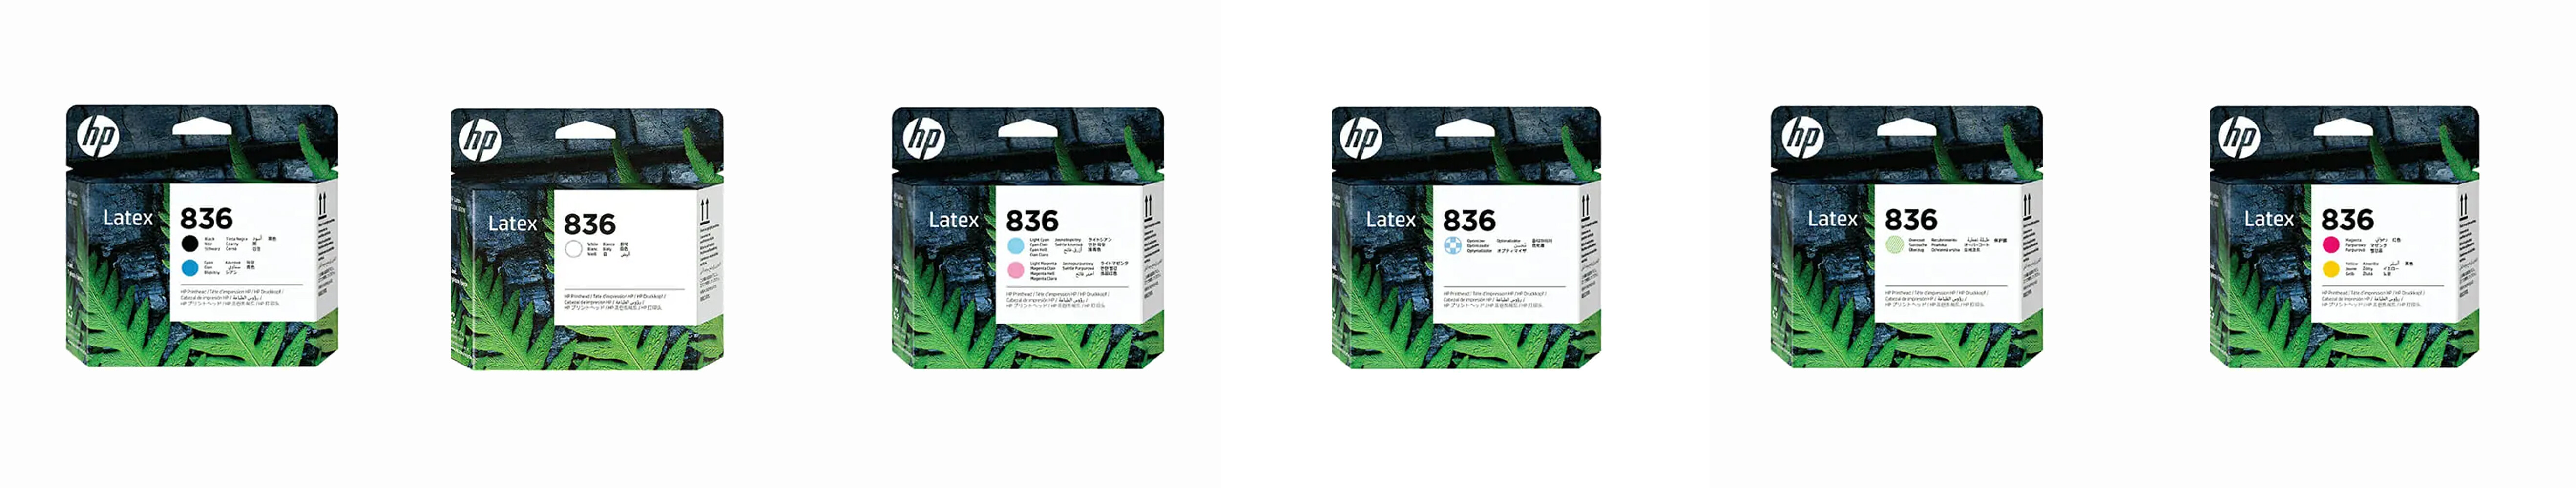 HP Latex 630 Series printheads